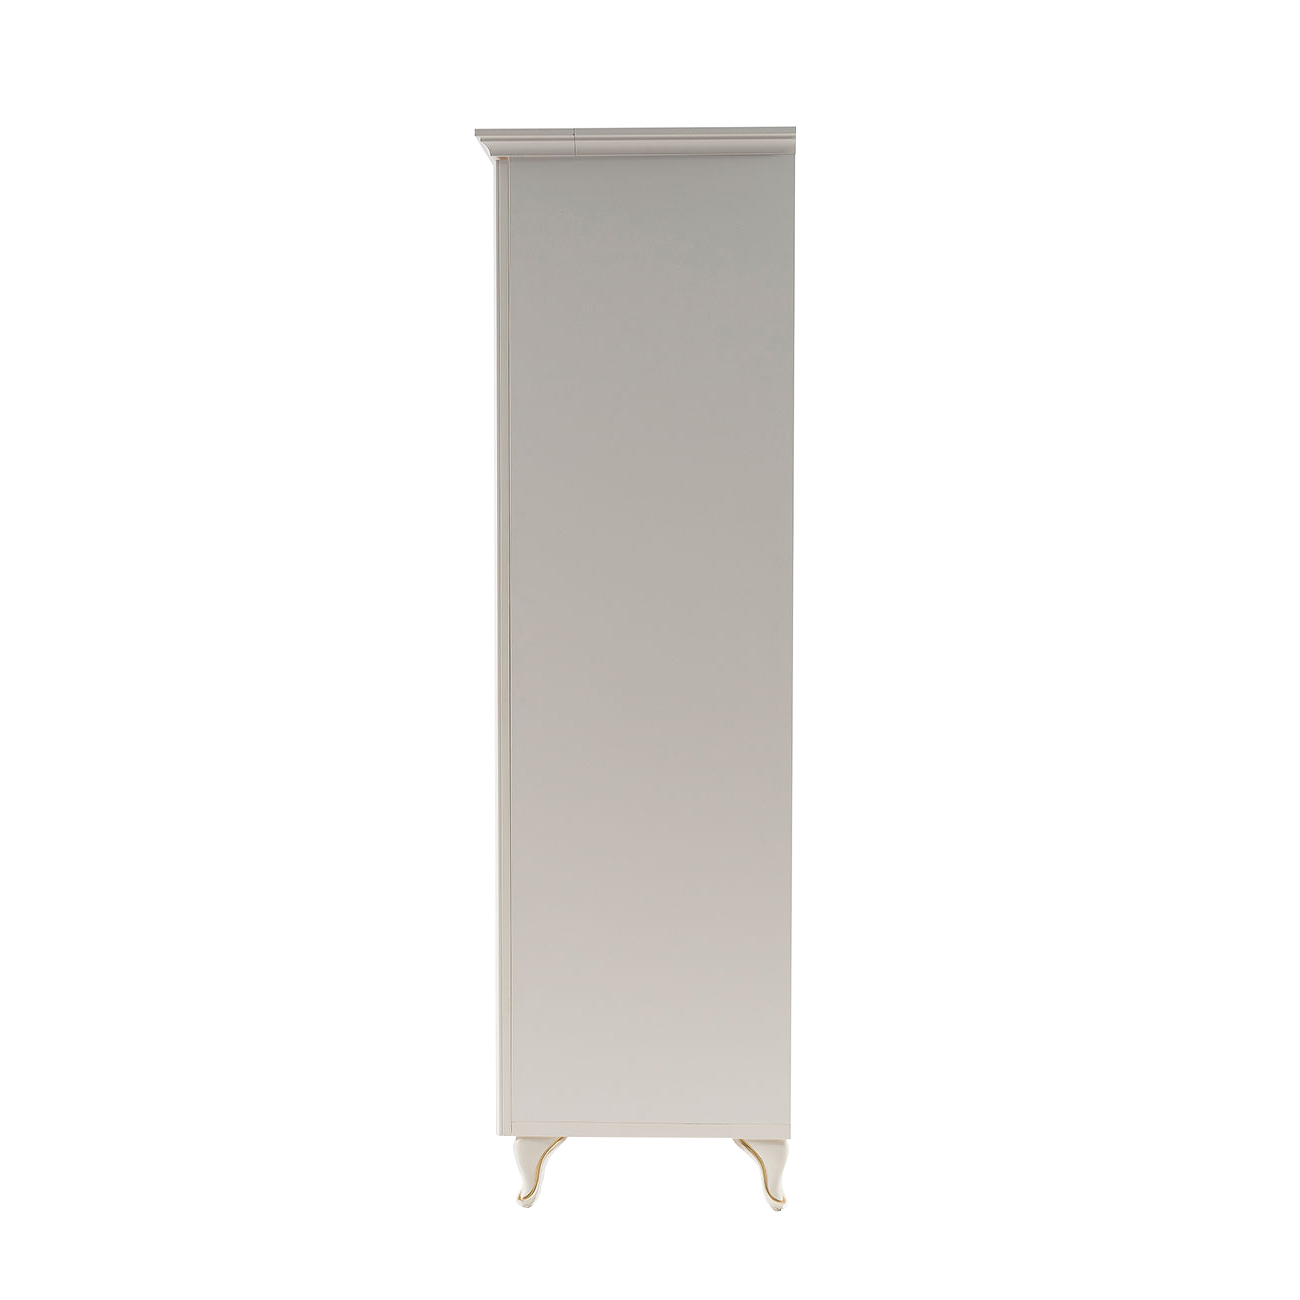 Шкаф Bellona Perlino, шестидверный, цвет: белый, размер 276х65х222 см (PERL-34)PERL-34